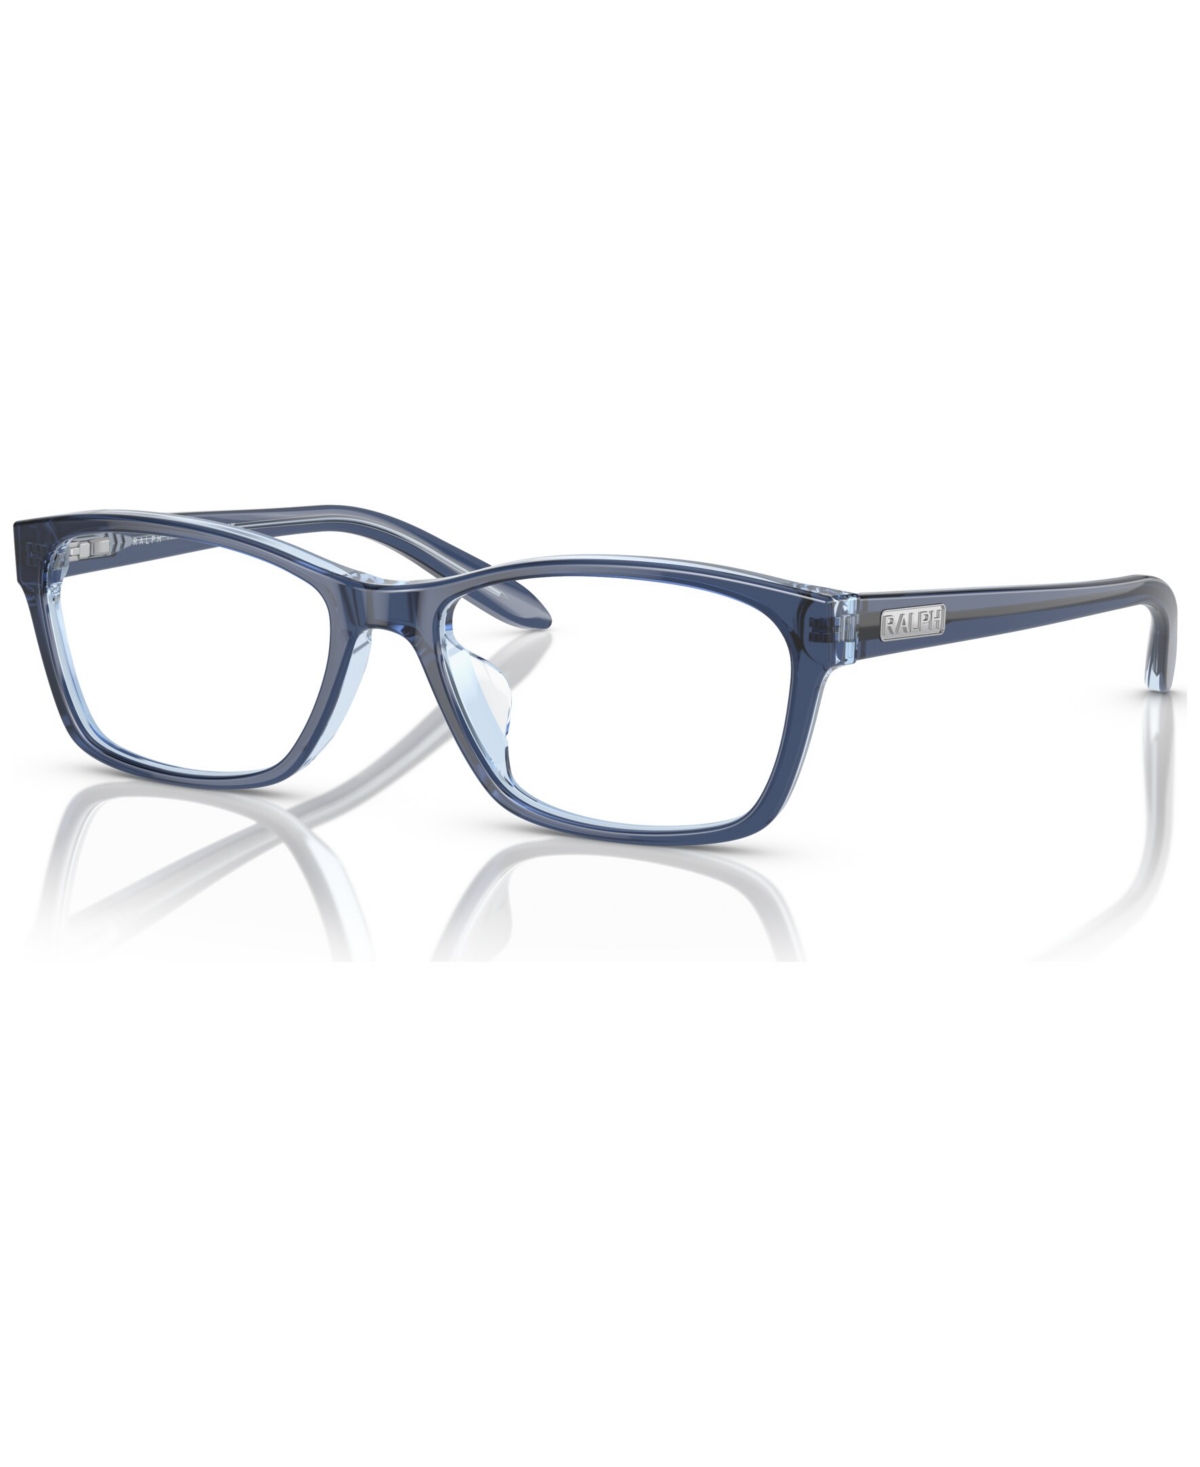 Women's Square Eyeglasses, RA7039 53 - Opal Blue On Light Opal Blue